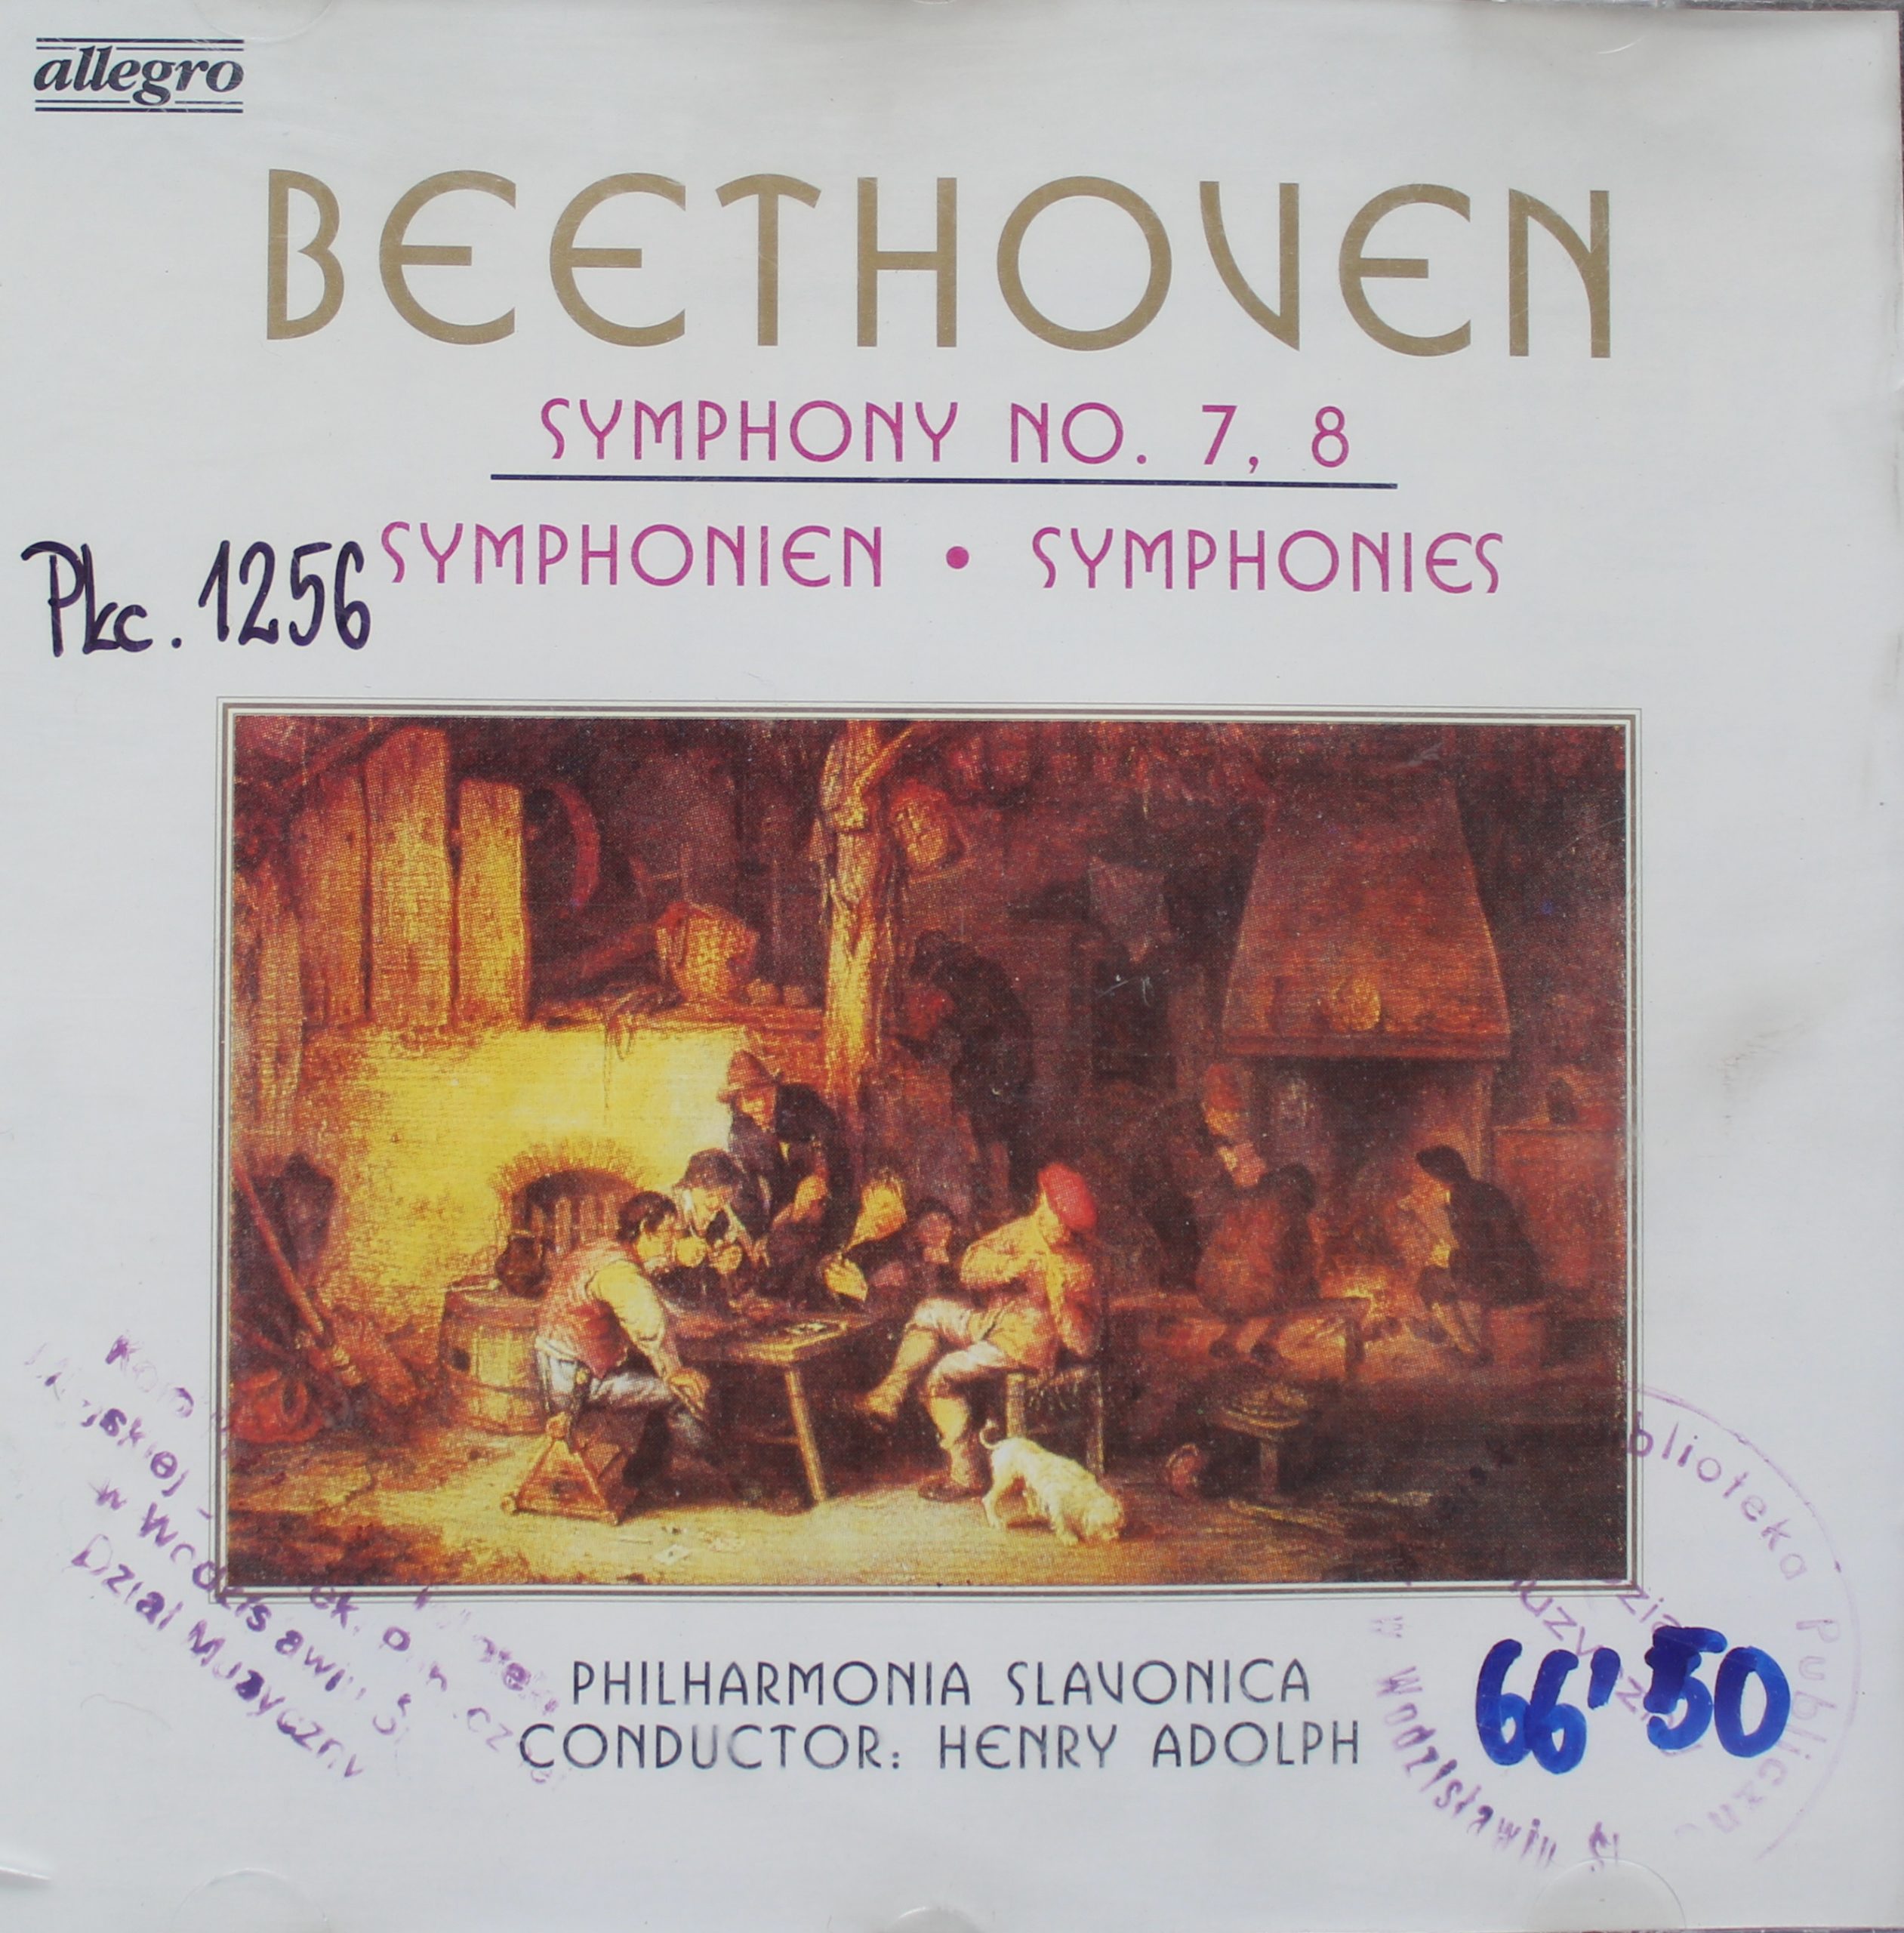 BEETHOVEN LUDWIG VAN – Symphony No. 7, 8